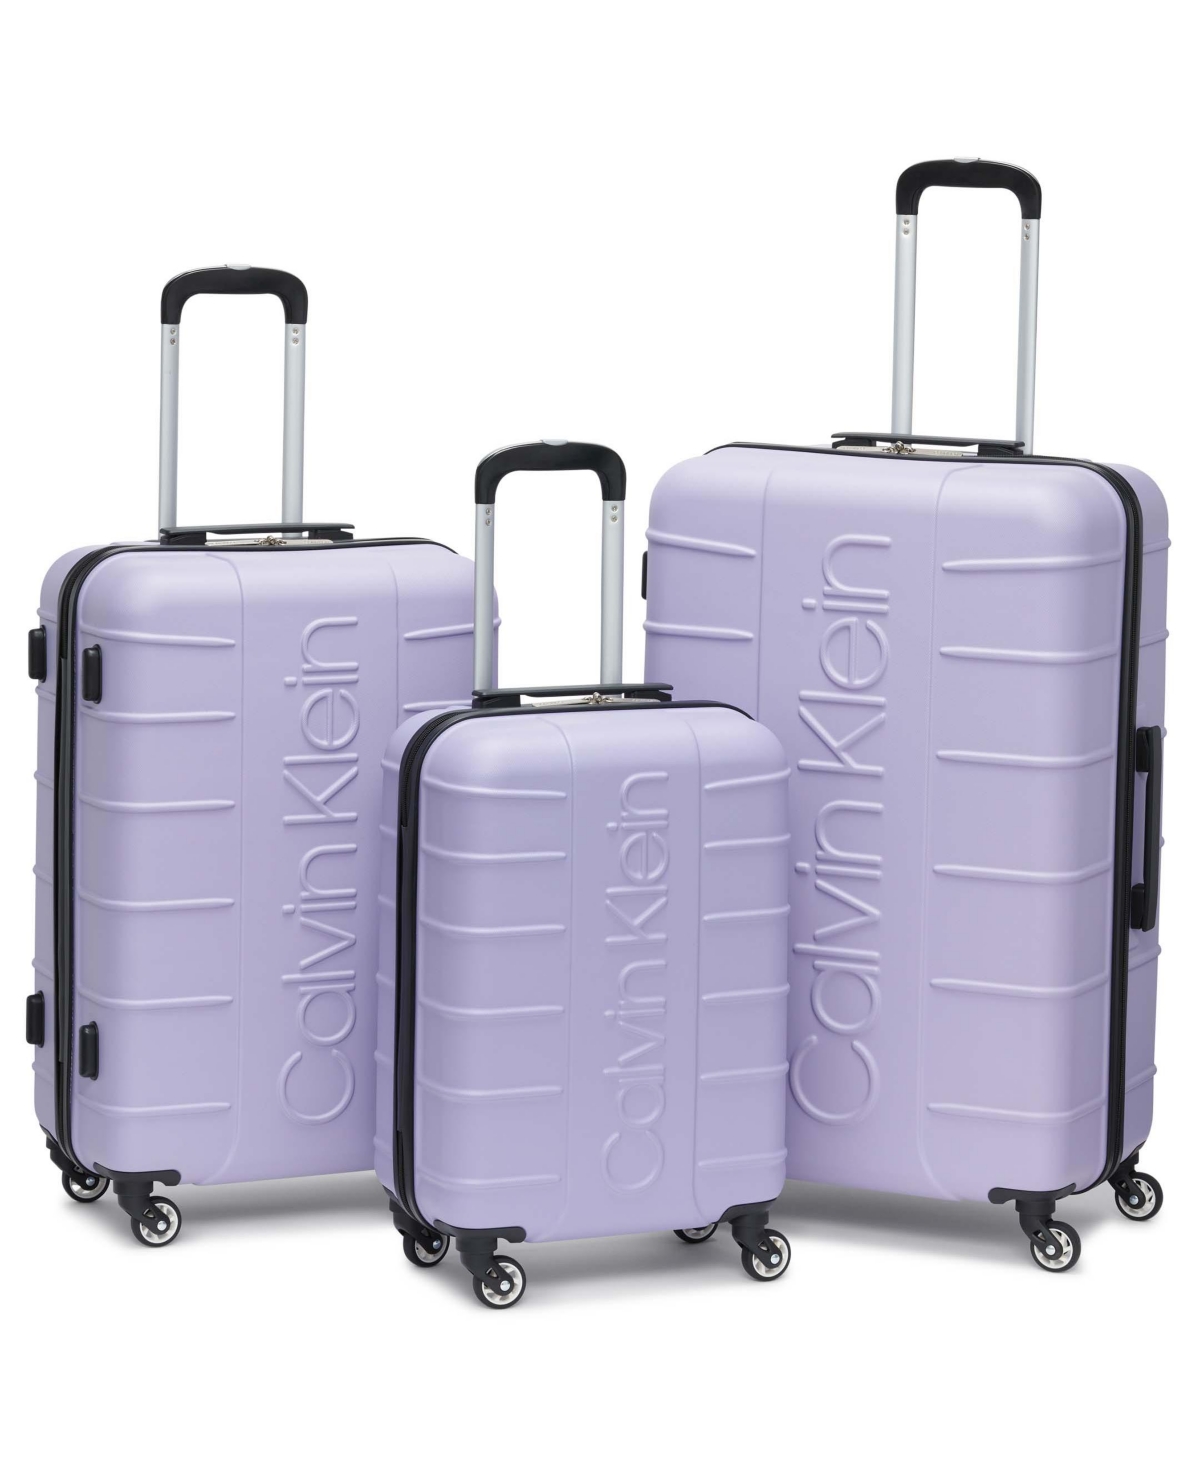 Calvin Klein Bowery Hard Side Luggage Set, 3 Piece